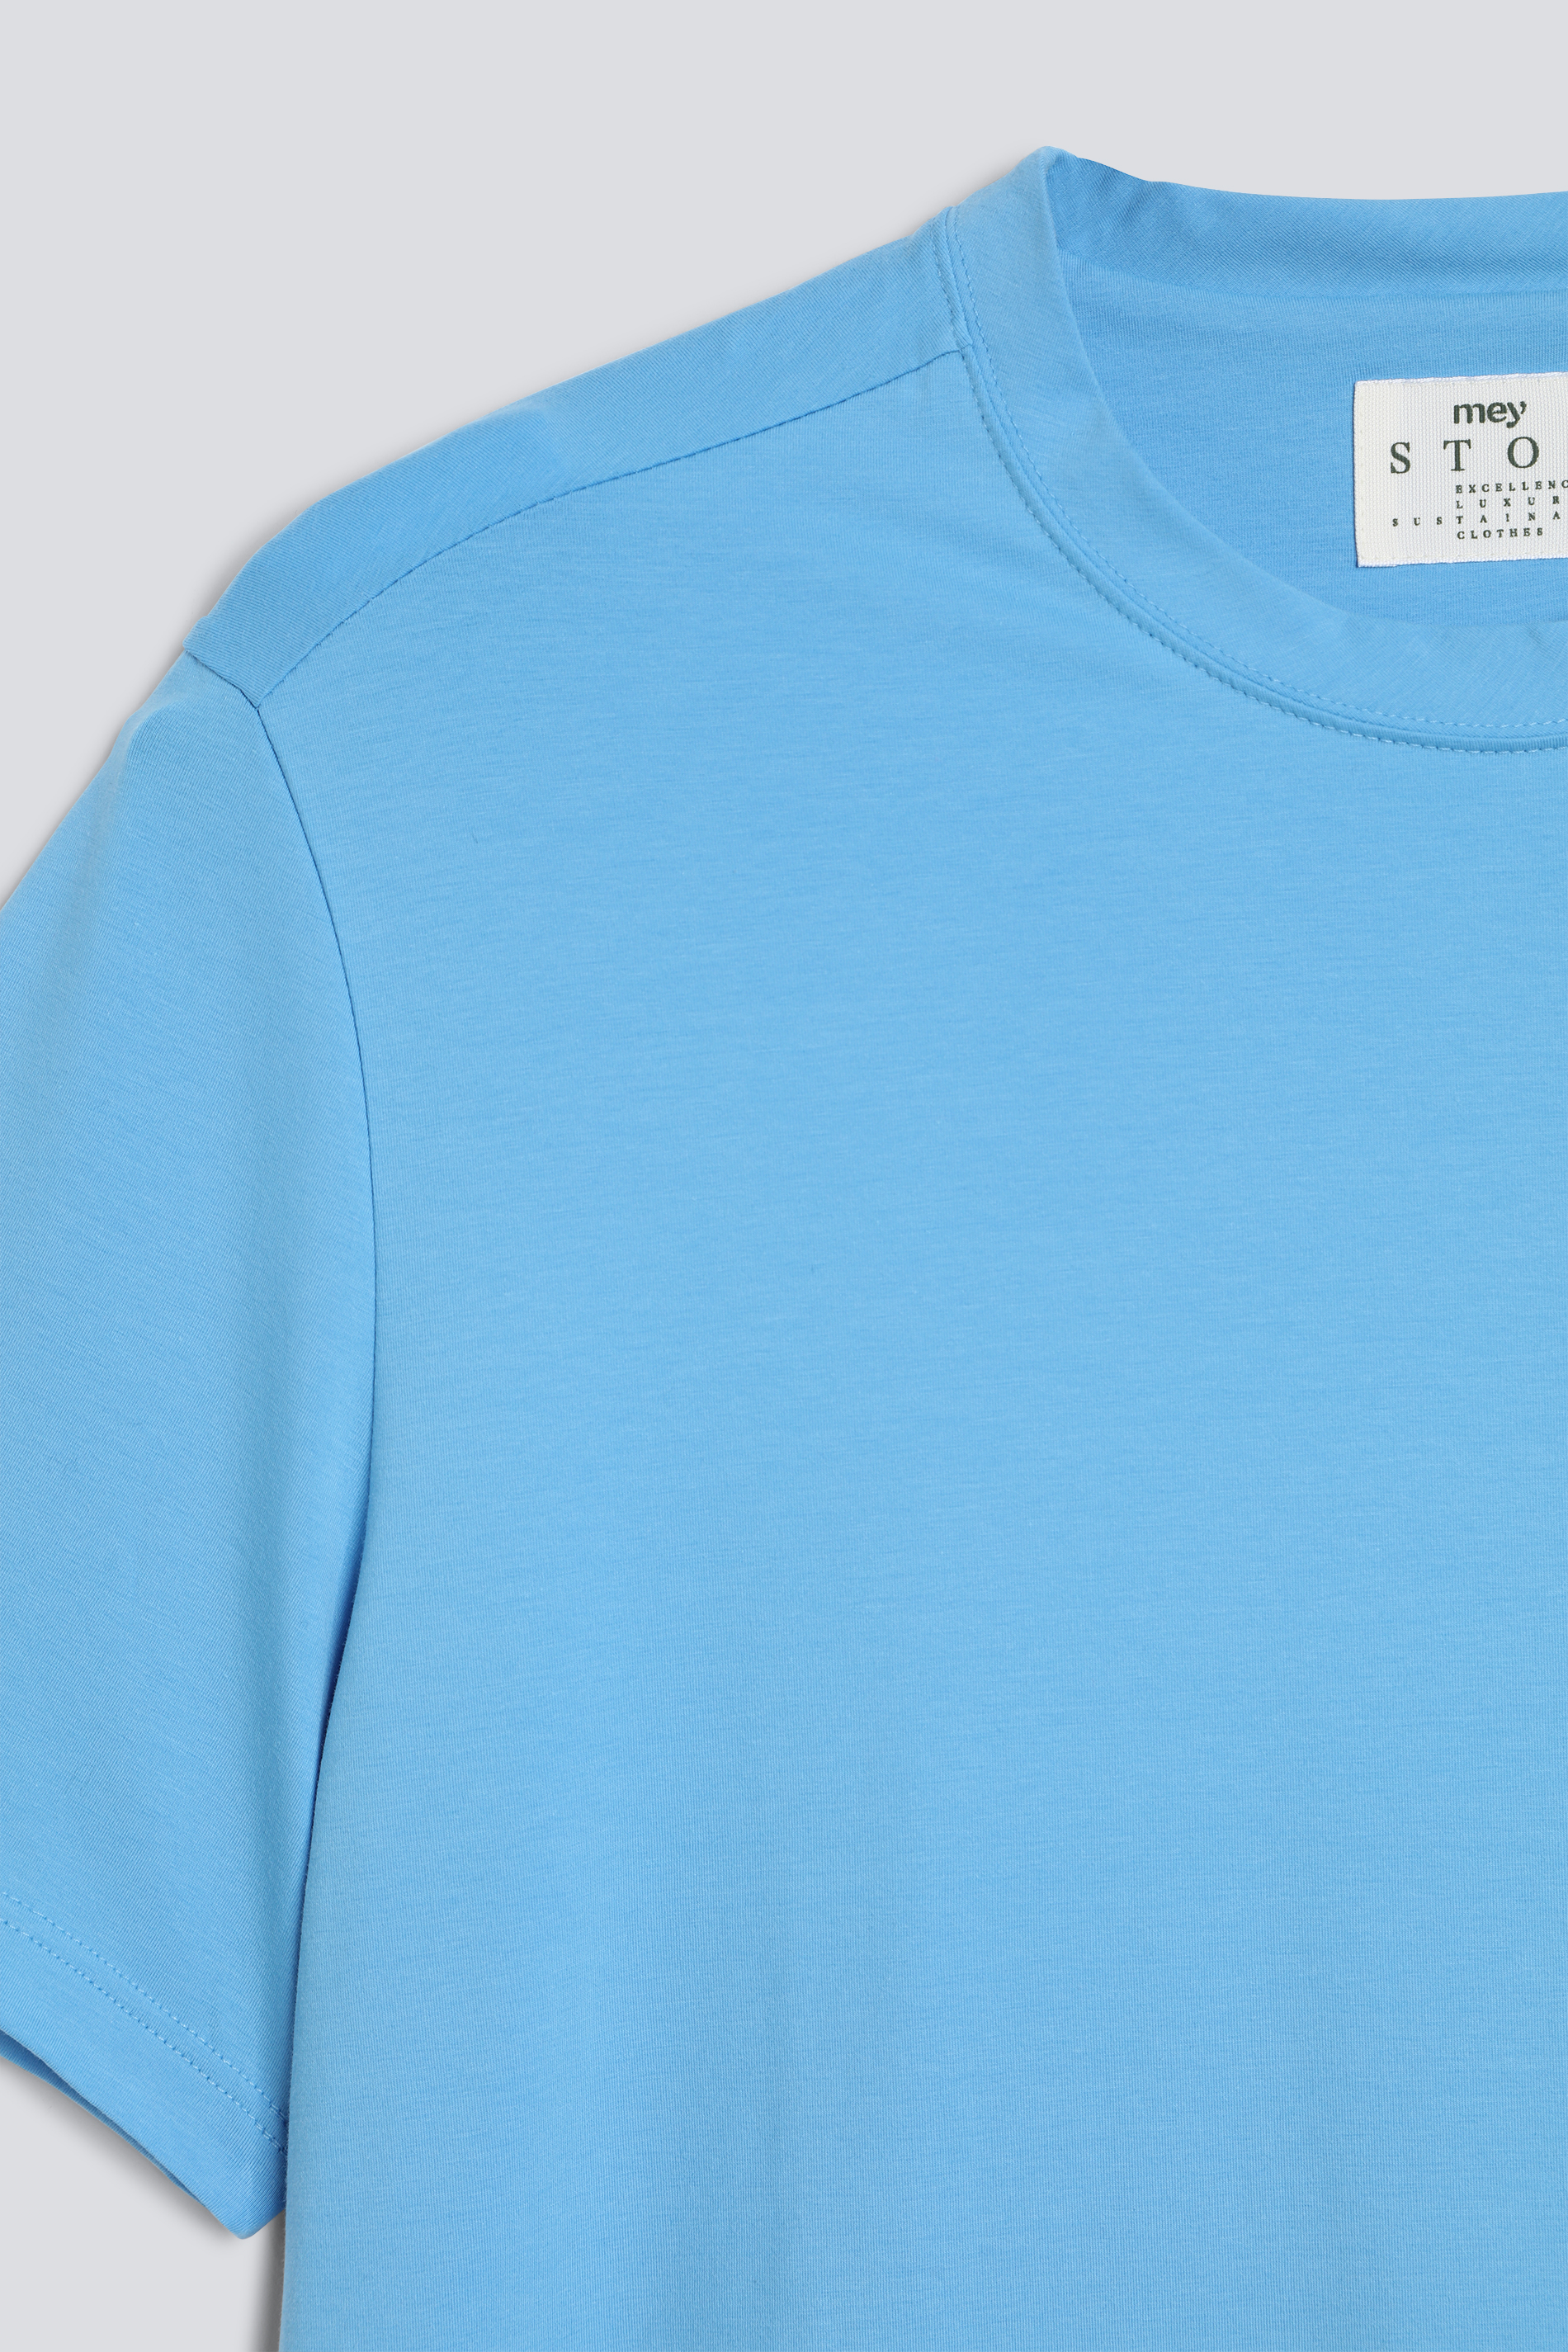 T-Shirt Serie Cotone Stretch Detailansicht 01 | mey®